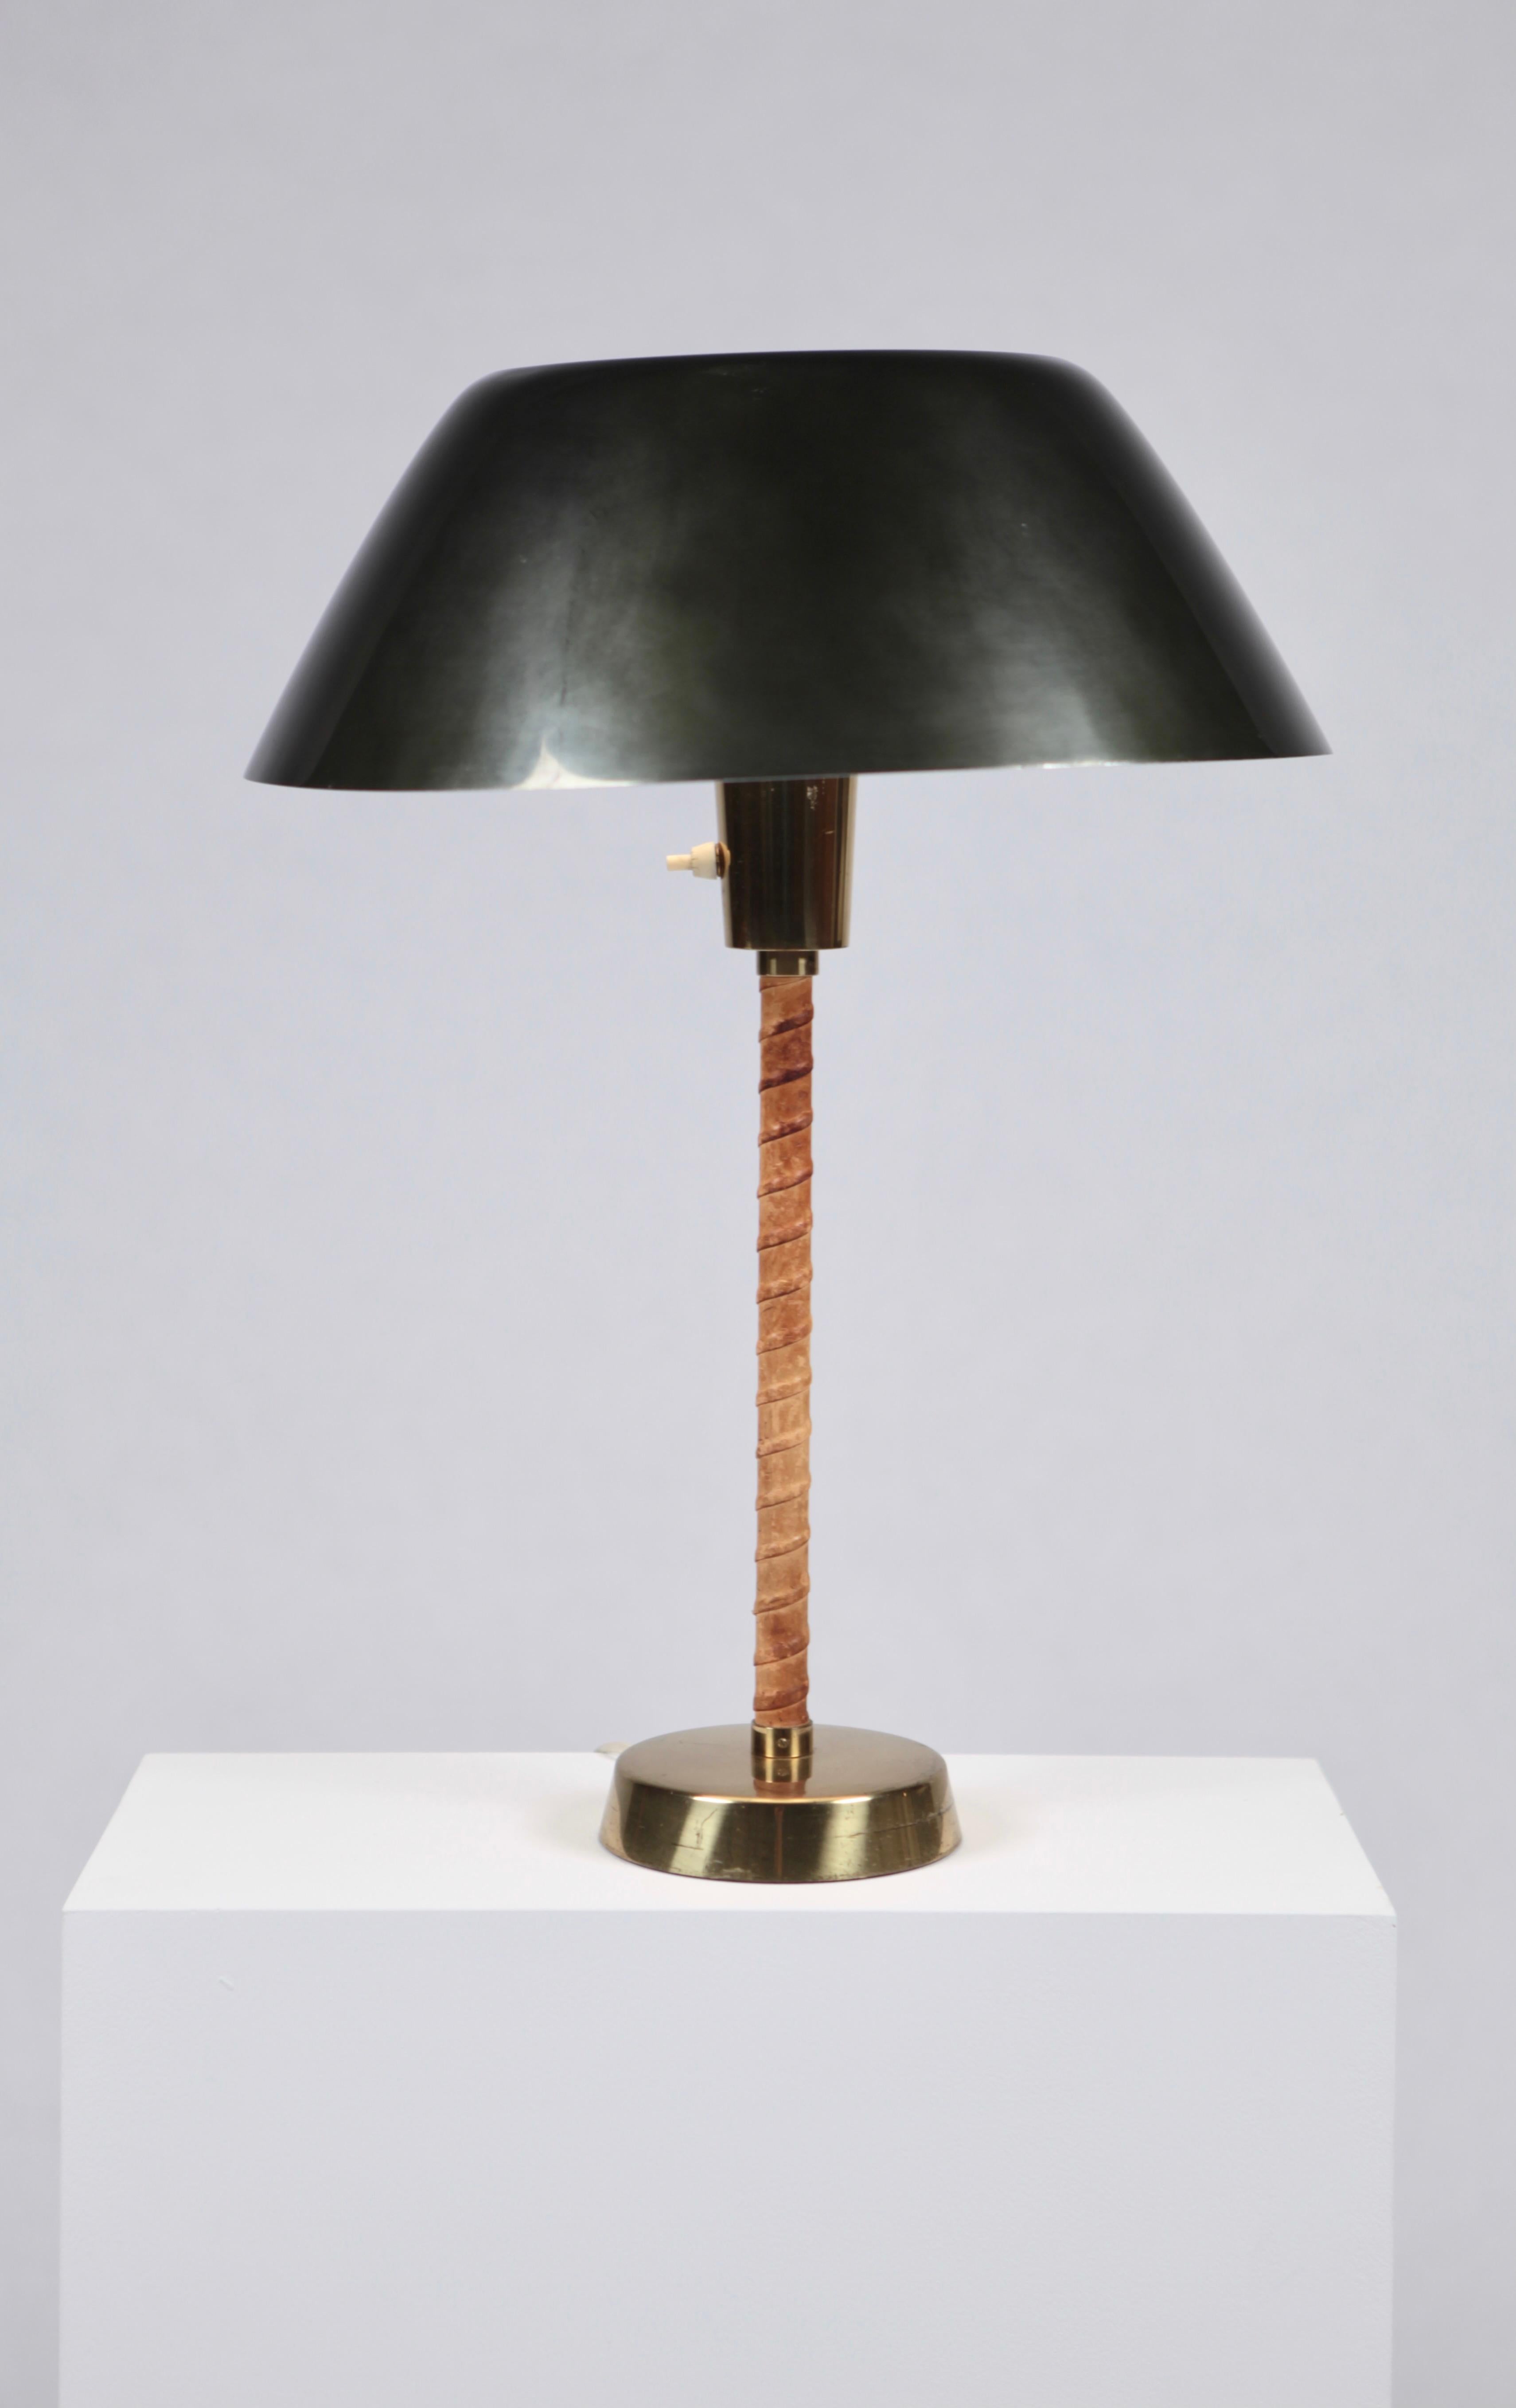 Scandinavian Modern Lisa Johansson-Pape, Senator Table Lamp, Designed, Finland, 1947